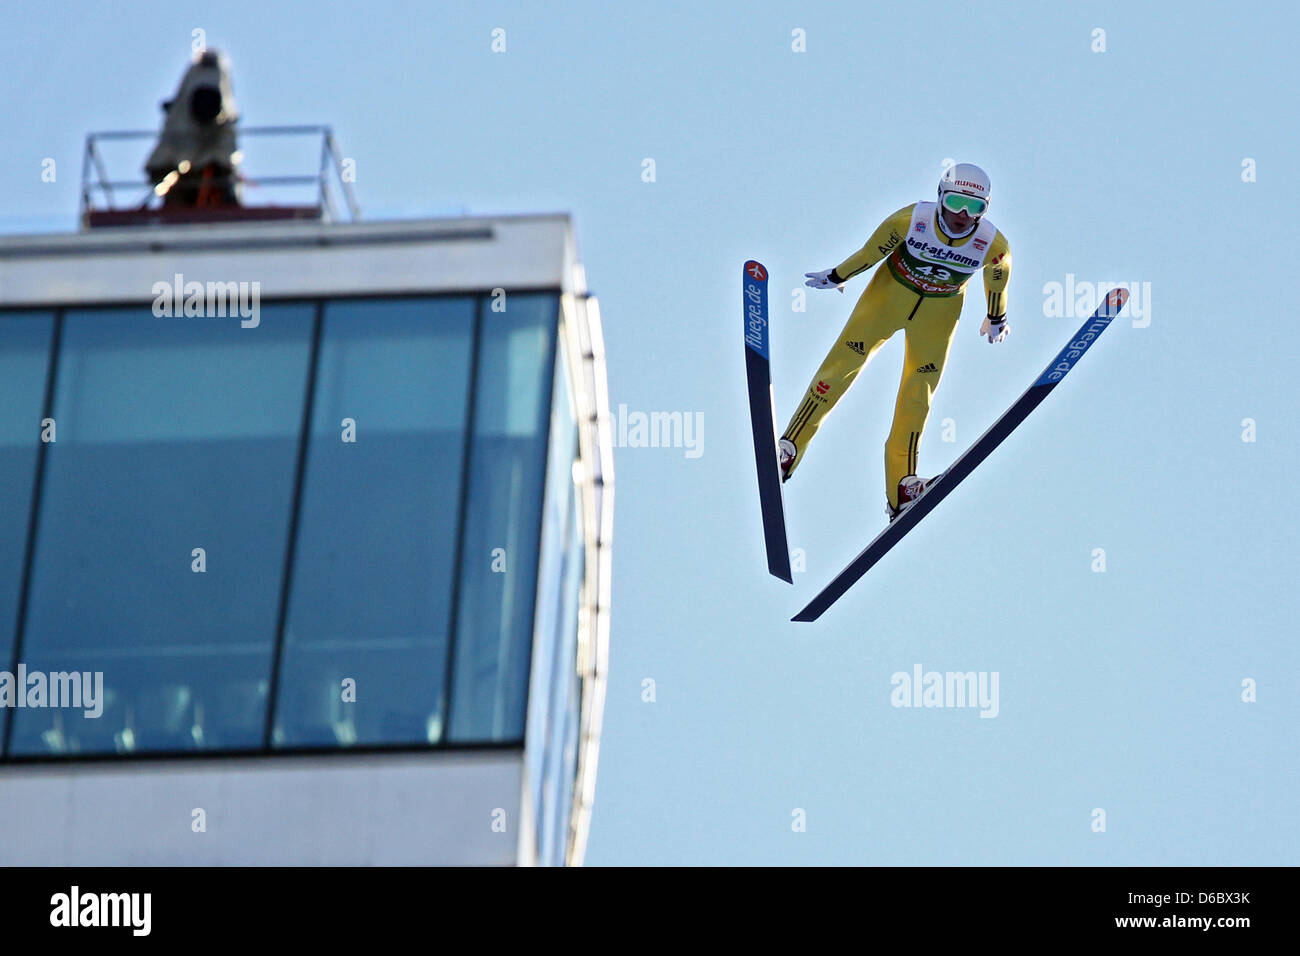 German ski jumper Maximillian Mechler jumps during the third jump of the qualification round at the 60th Four Hills Tournament in Innsbruck, Austria, 03 January 2012. Photo: DANIEL KARMANN Stock Photo